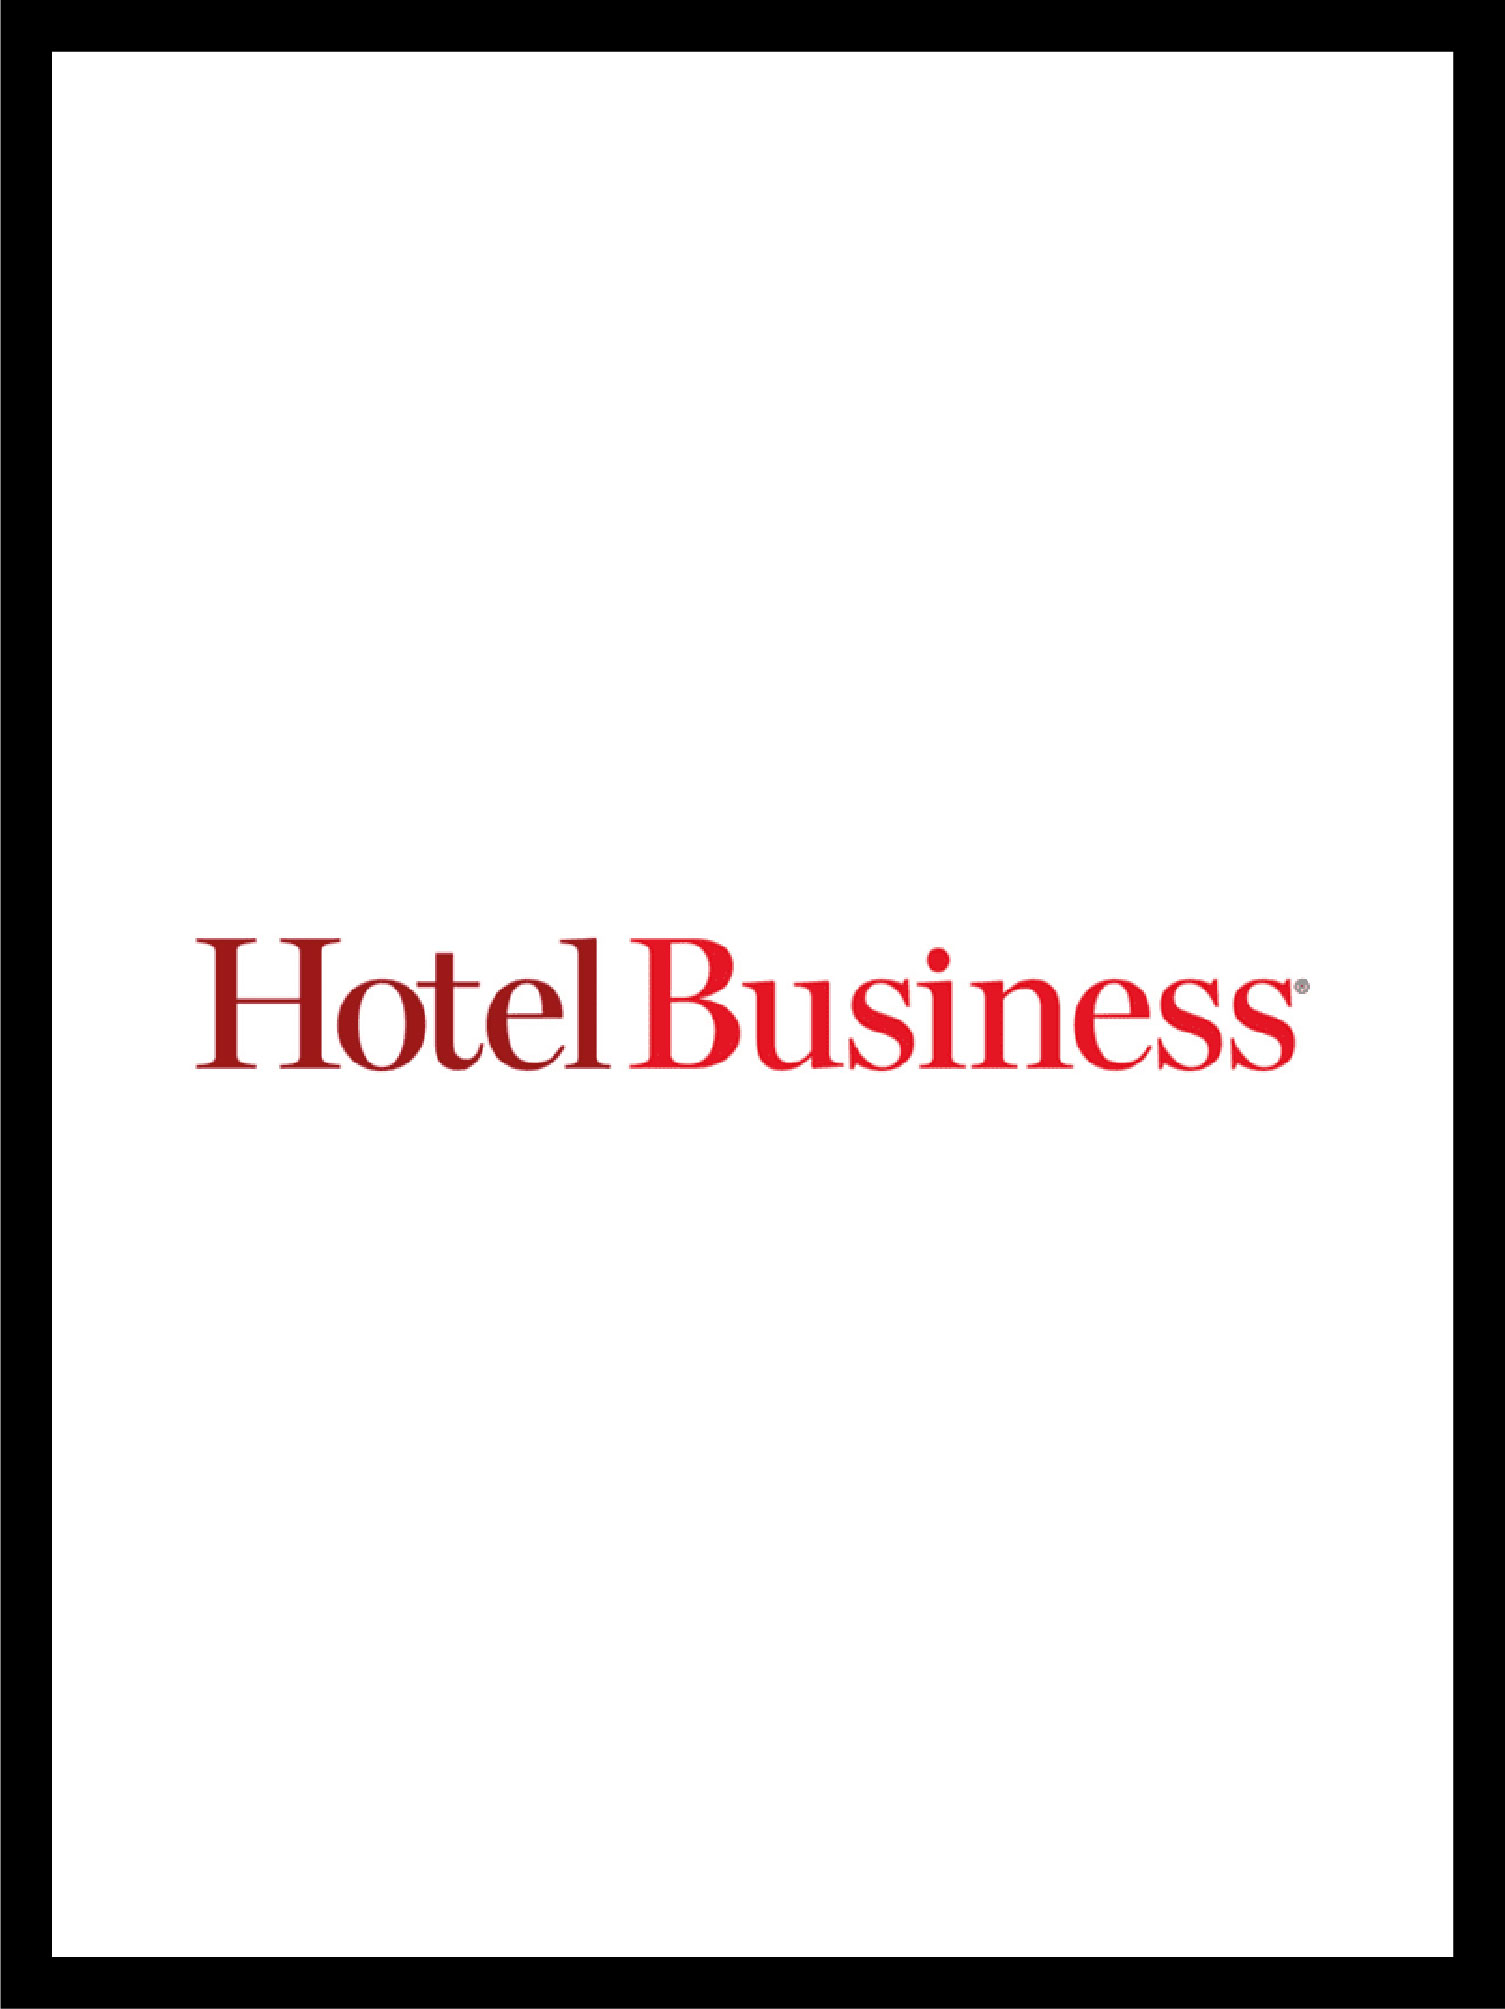 logo pf the magazine hotel business